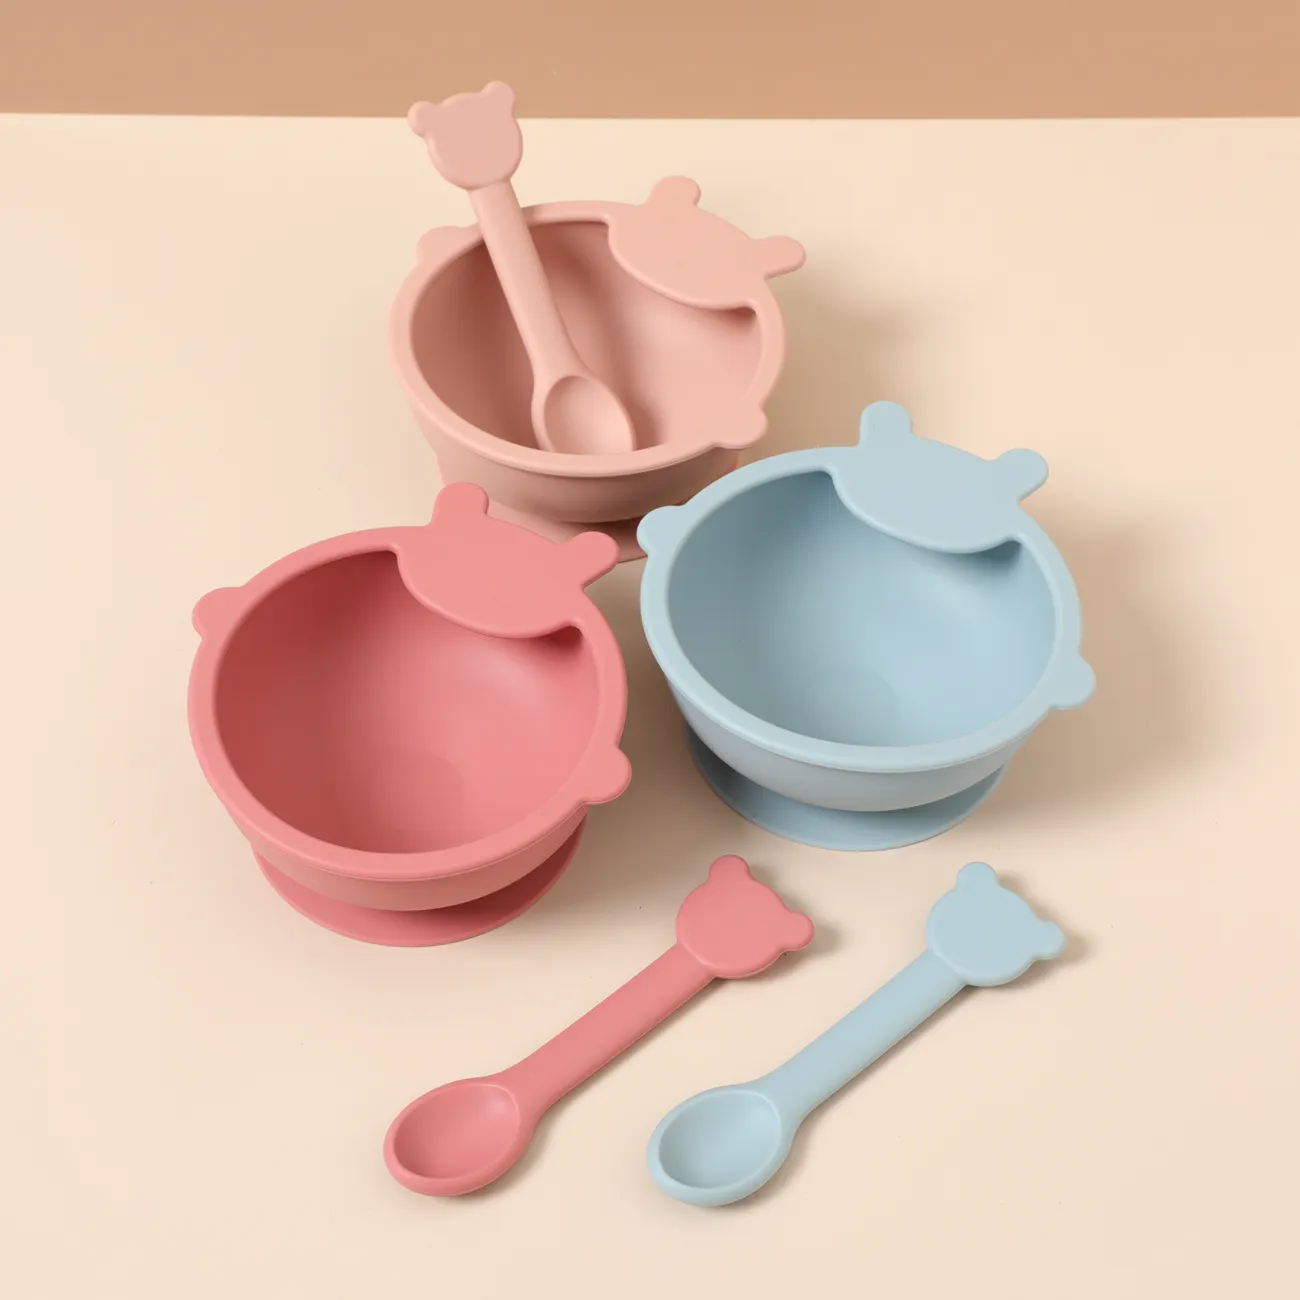 2-pack Cartoon Shape Food Grade Silicone Baby Toddler Self-Feeding Bowl Spoon Utensils Set for Self-Training Blue big image 1